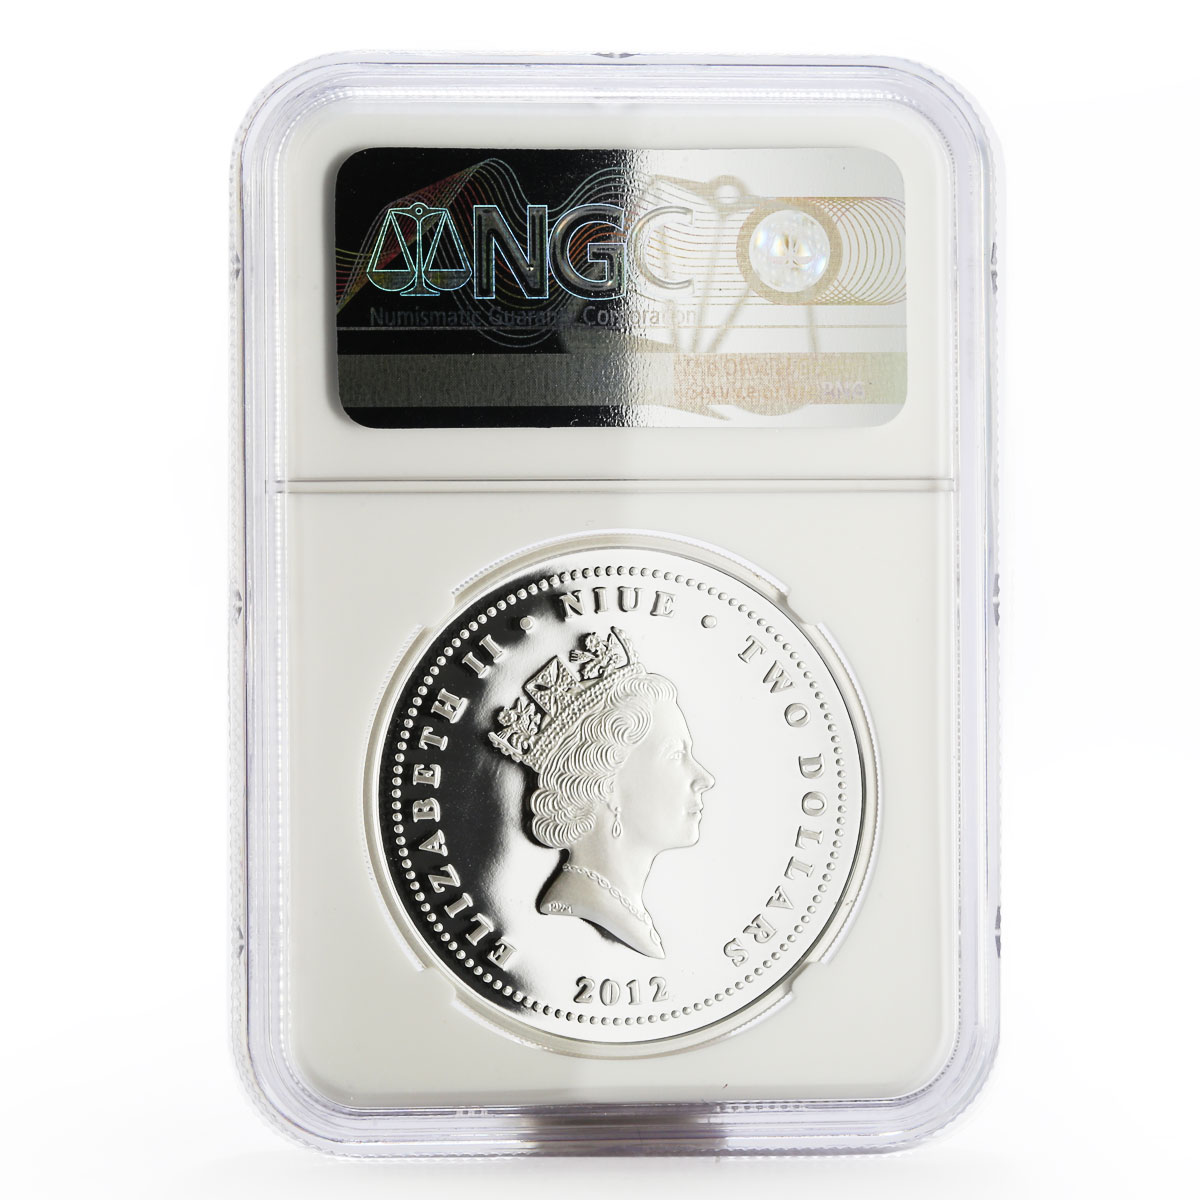 Niue 2 dollars Star Wars Anakin Skywalker PF-70 NGC colored silver coin 2012